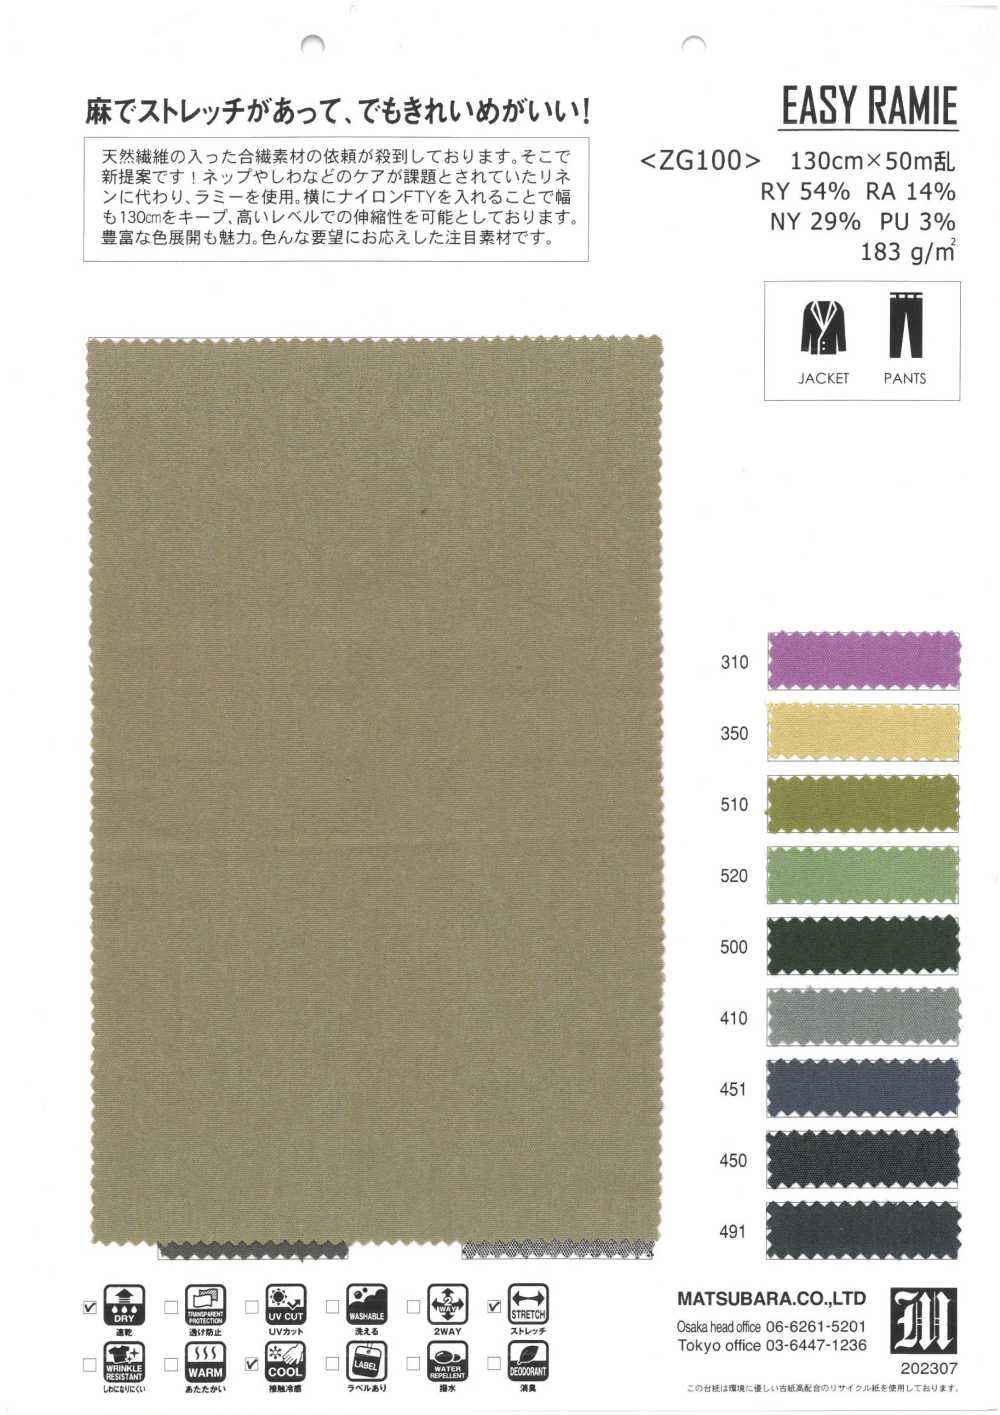 ZG100 EASY RAMIE[Textile / Fabric] Matsubara